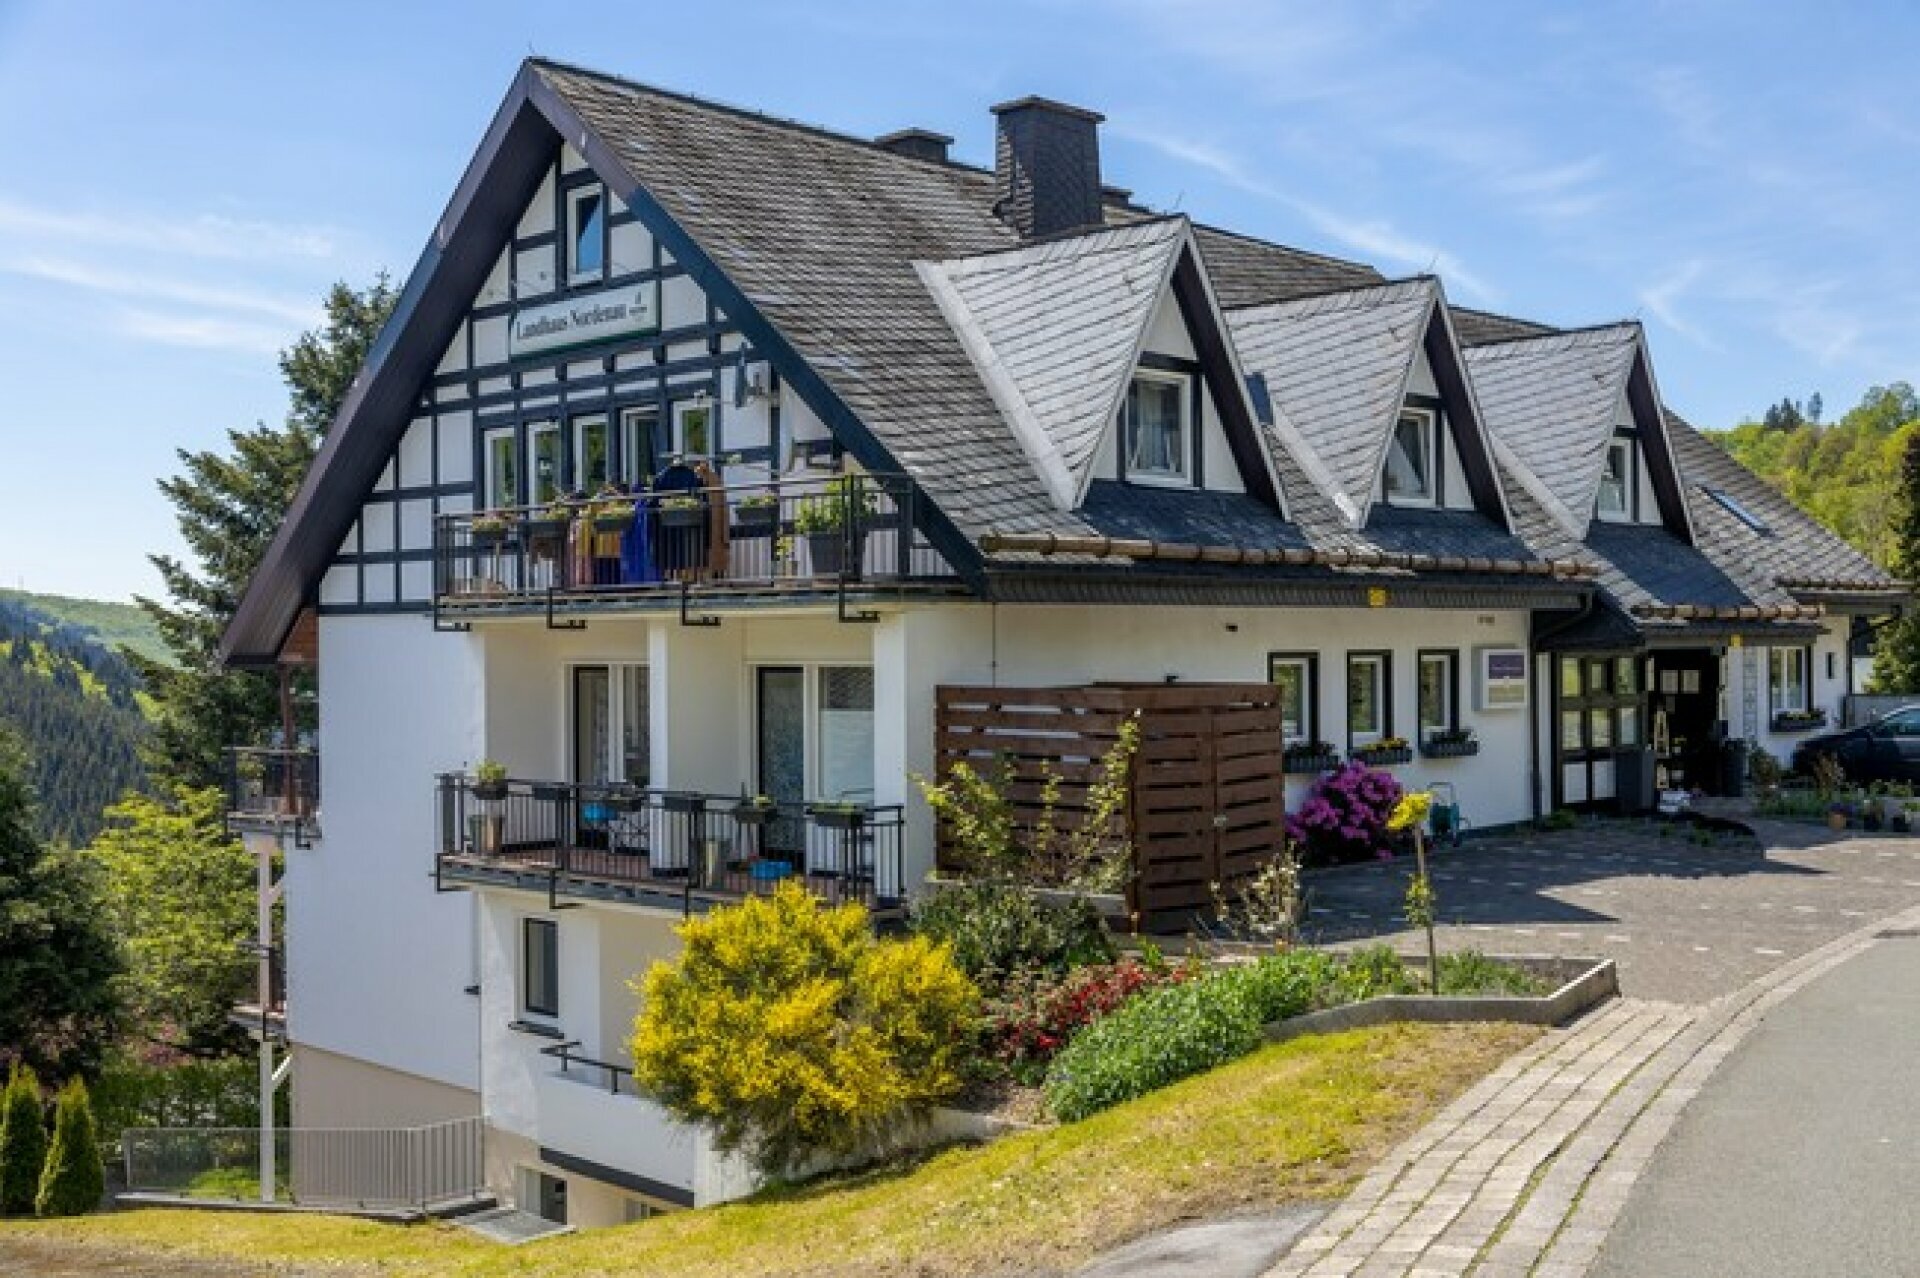 4 Tages-Pauschale mit Halbpension - Hotel Landhaus Nordenau